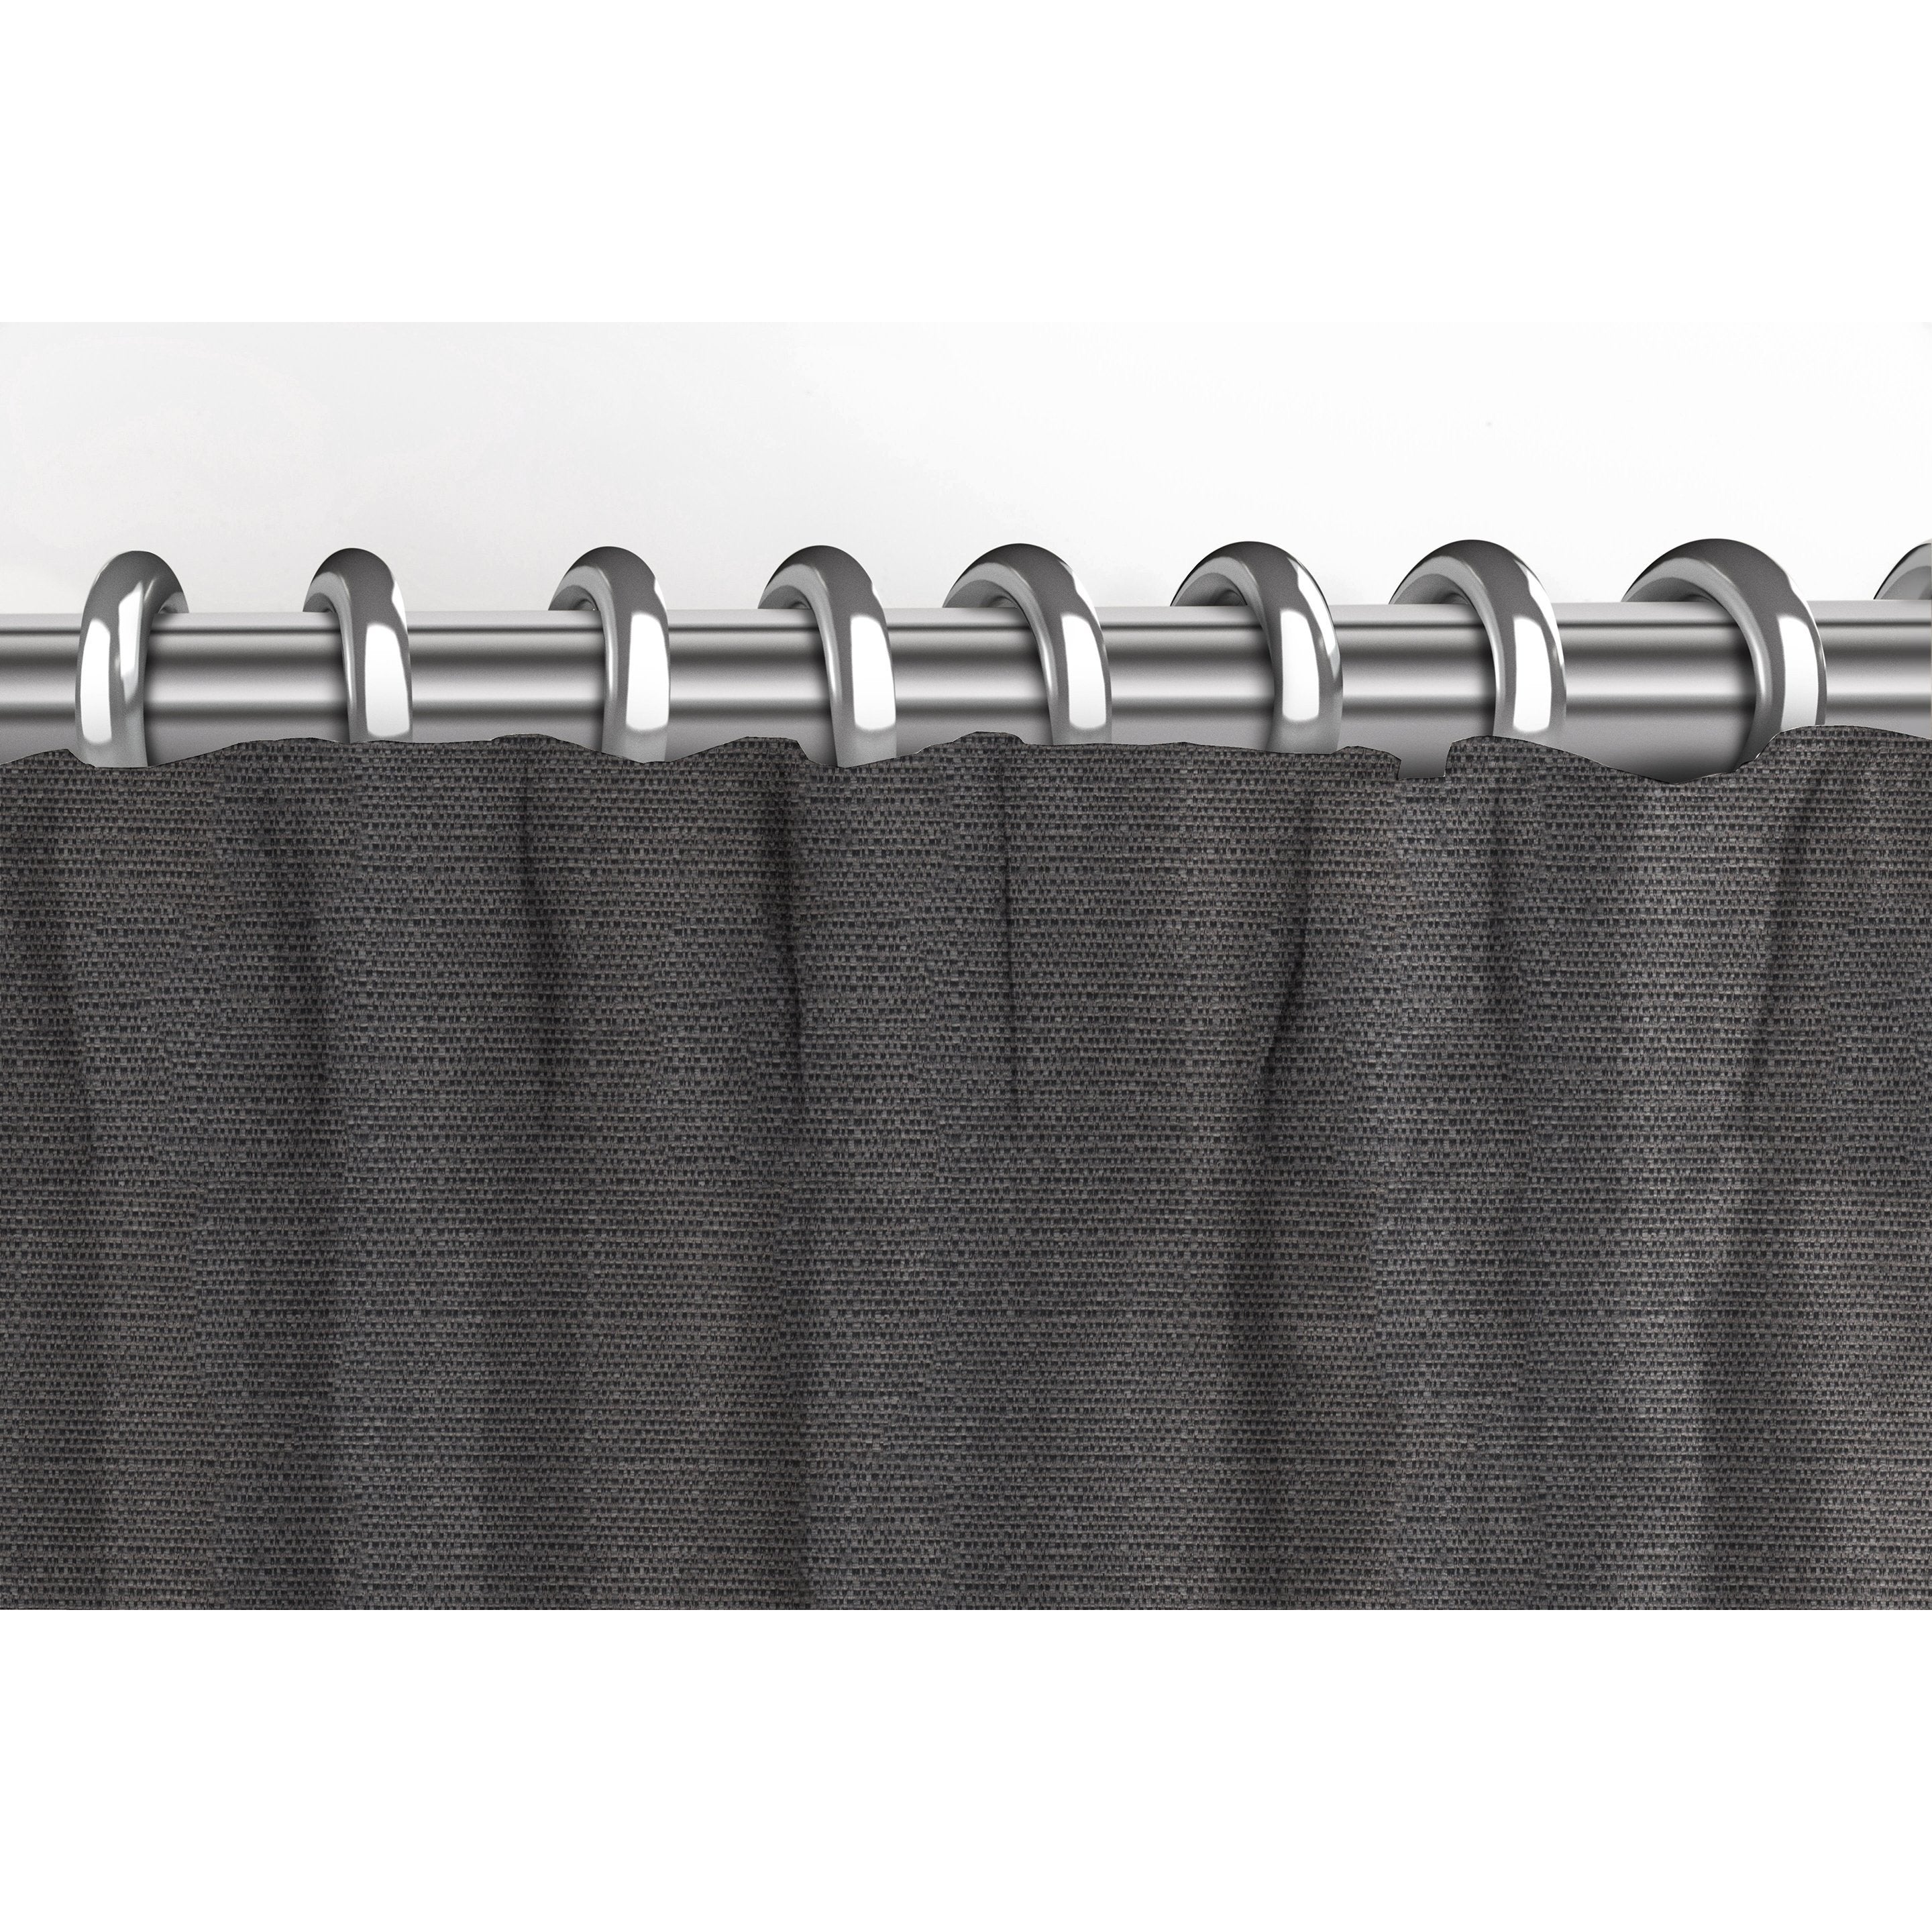 McAlister Textiles Savannah Charcoal Grey Curtains Tailored Curtains 